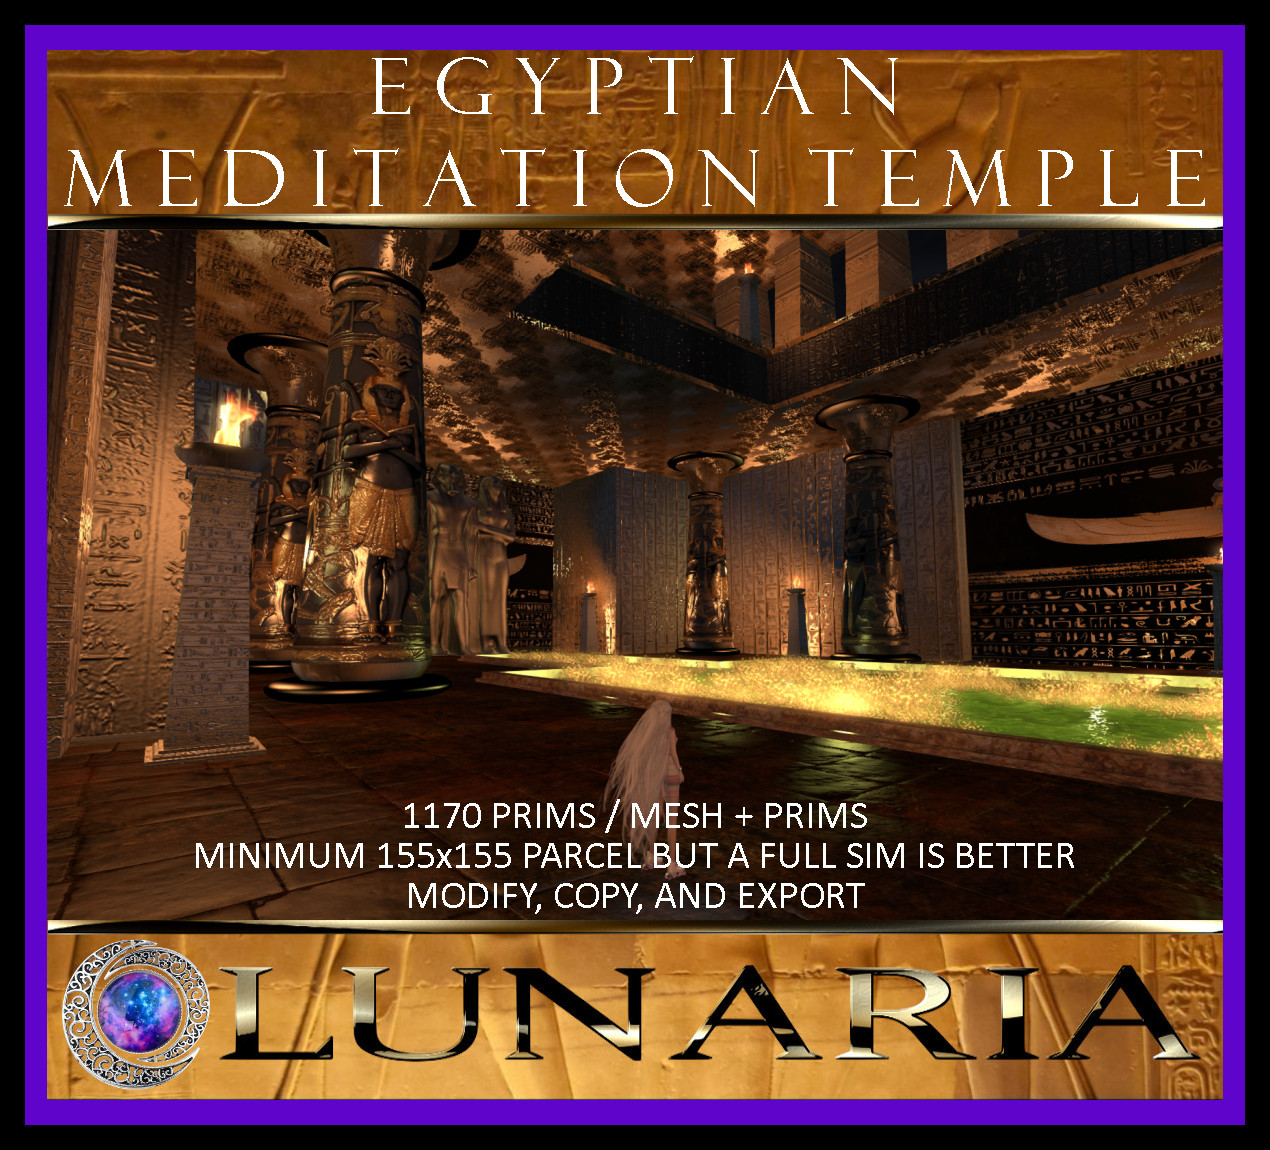 Meditation Temple Title Page.jpg